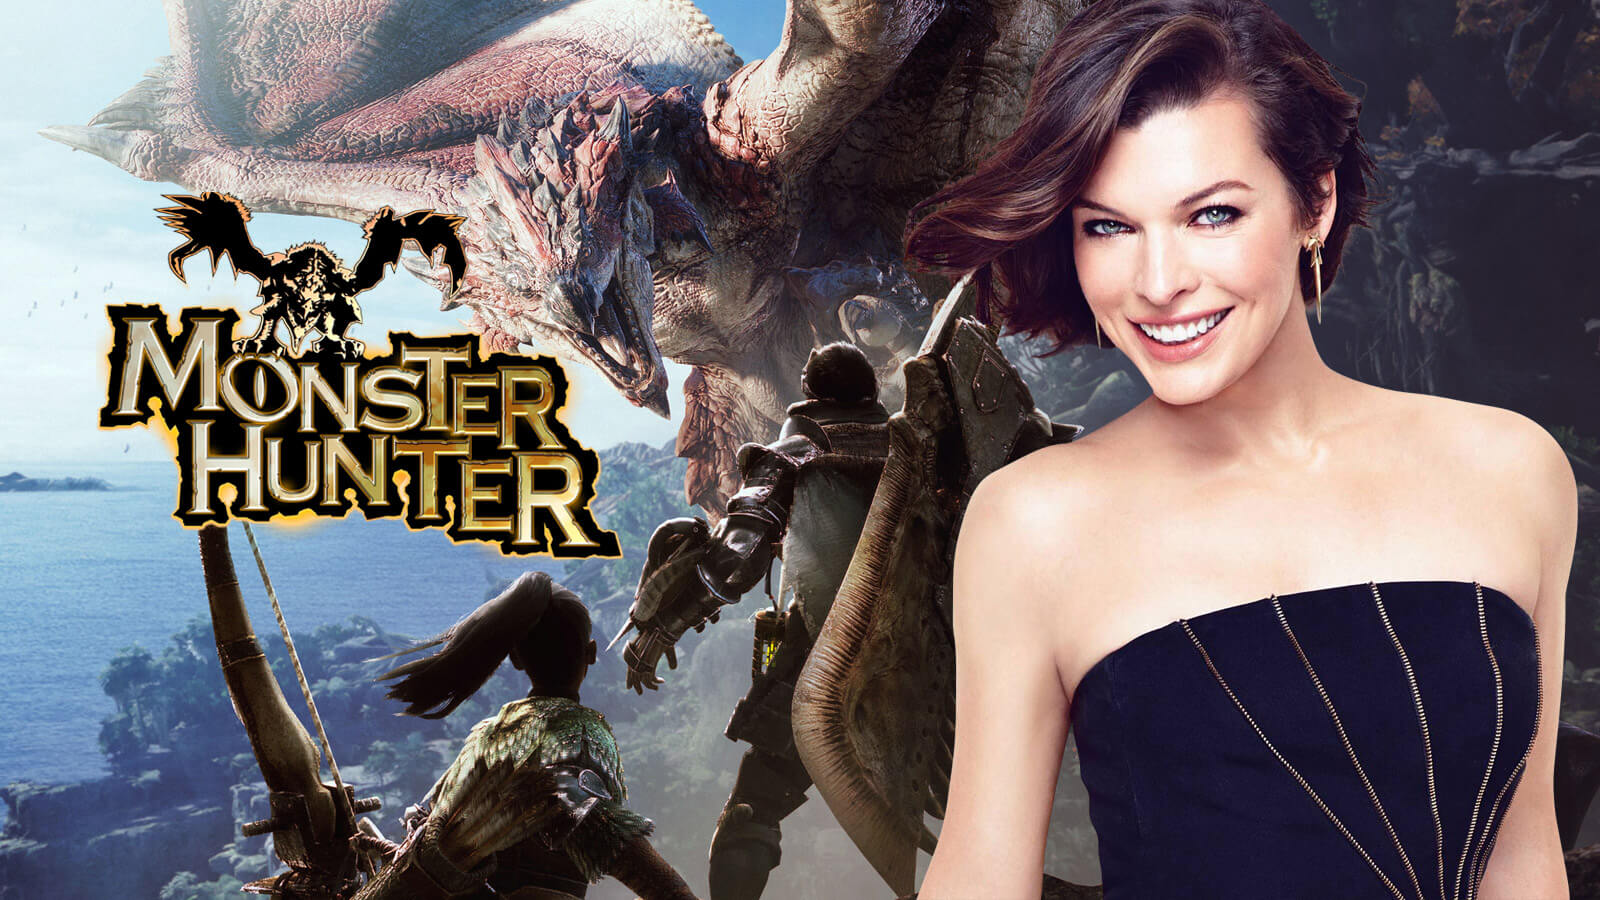 Milla-Jovovich-To-Star-in-Monster-Hunter-Movie-GamerSRD